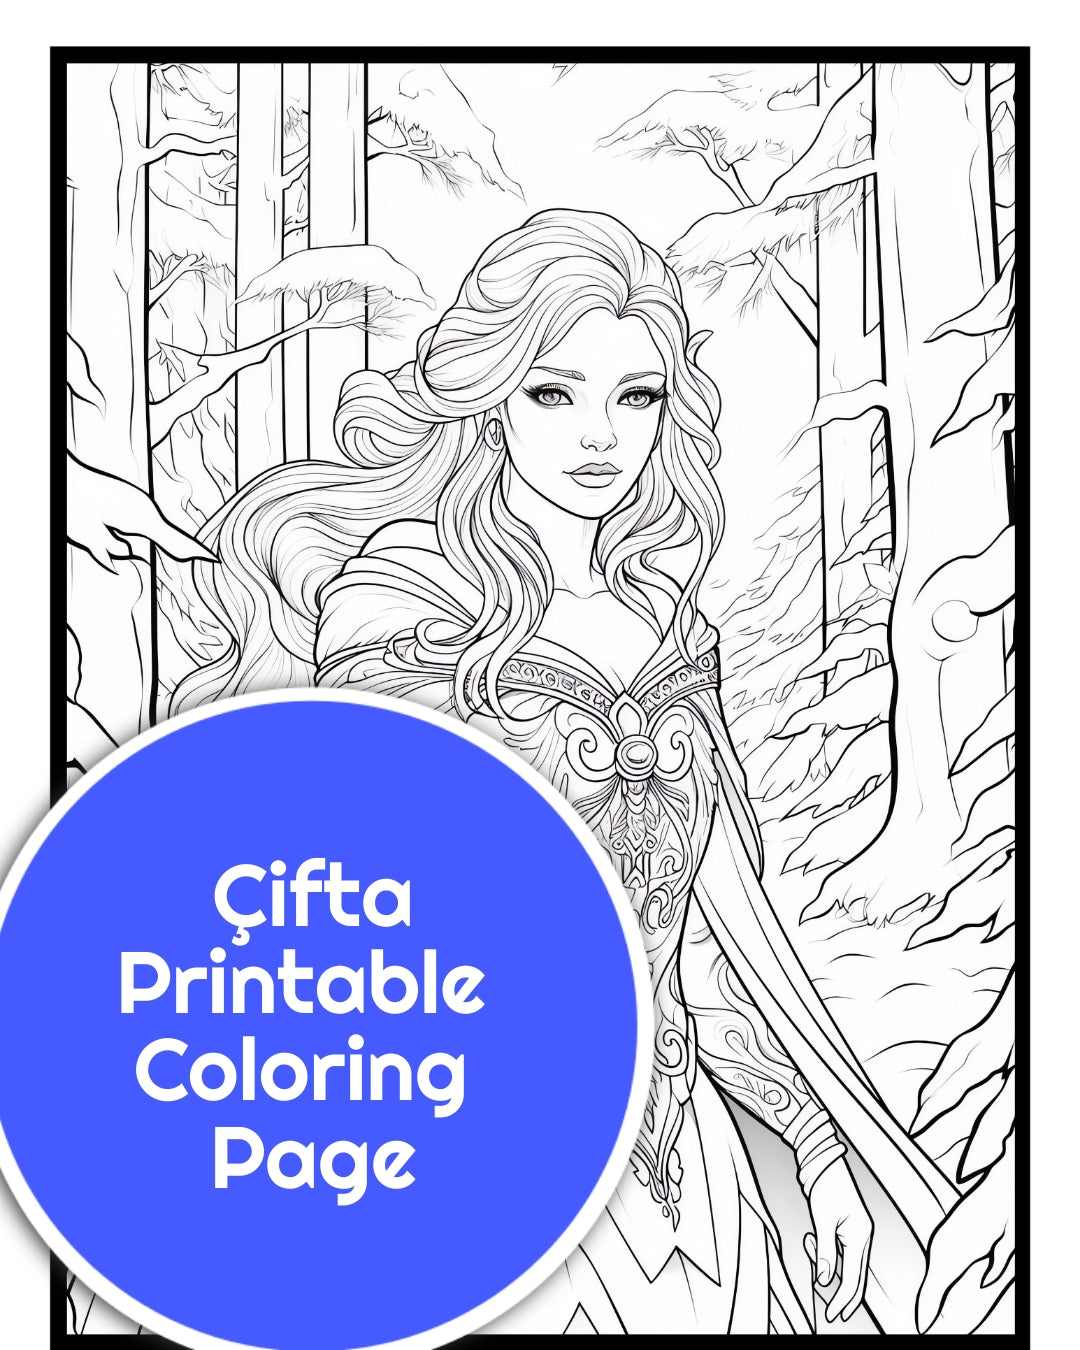 Cifta printable coloring page